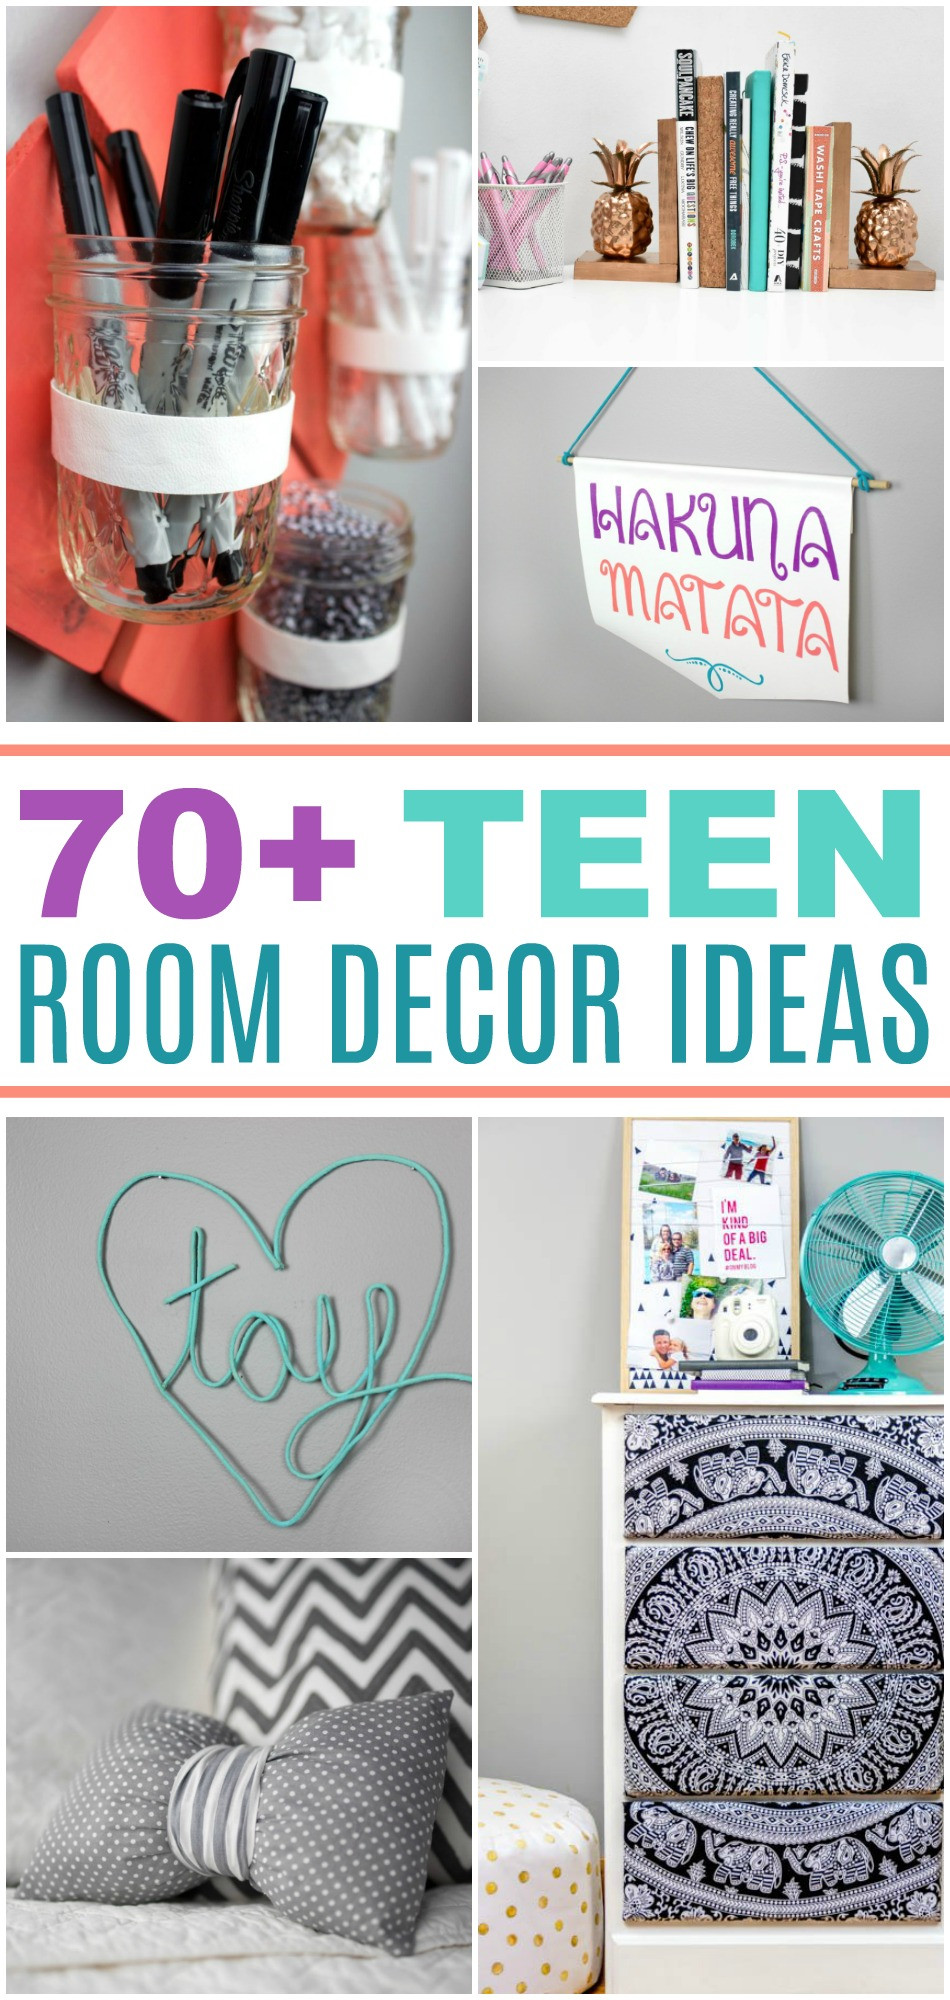 Teen Room Decor DIY
 70 DIY Room Decor Ideas For Teens